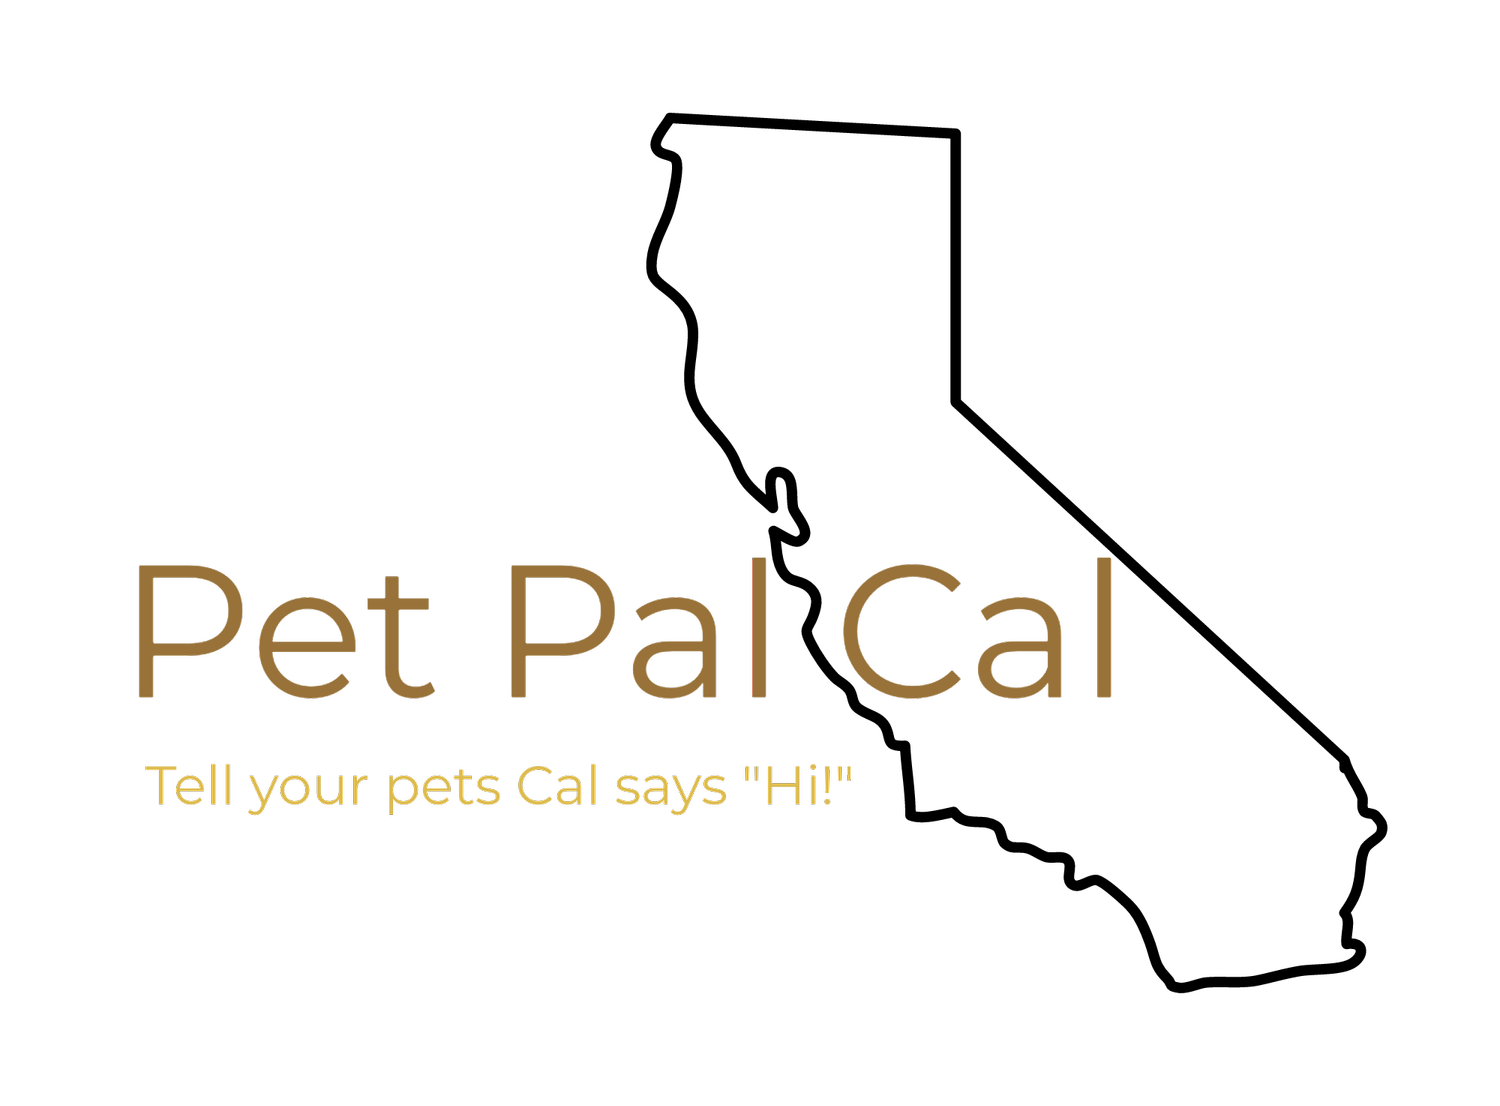 Pet Pal Cal - California Pet and House Sitting Dog Walking